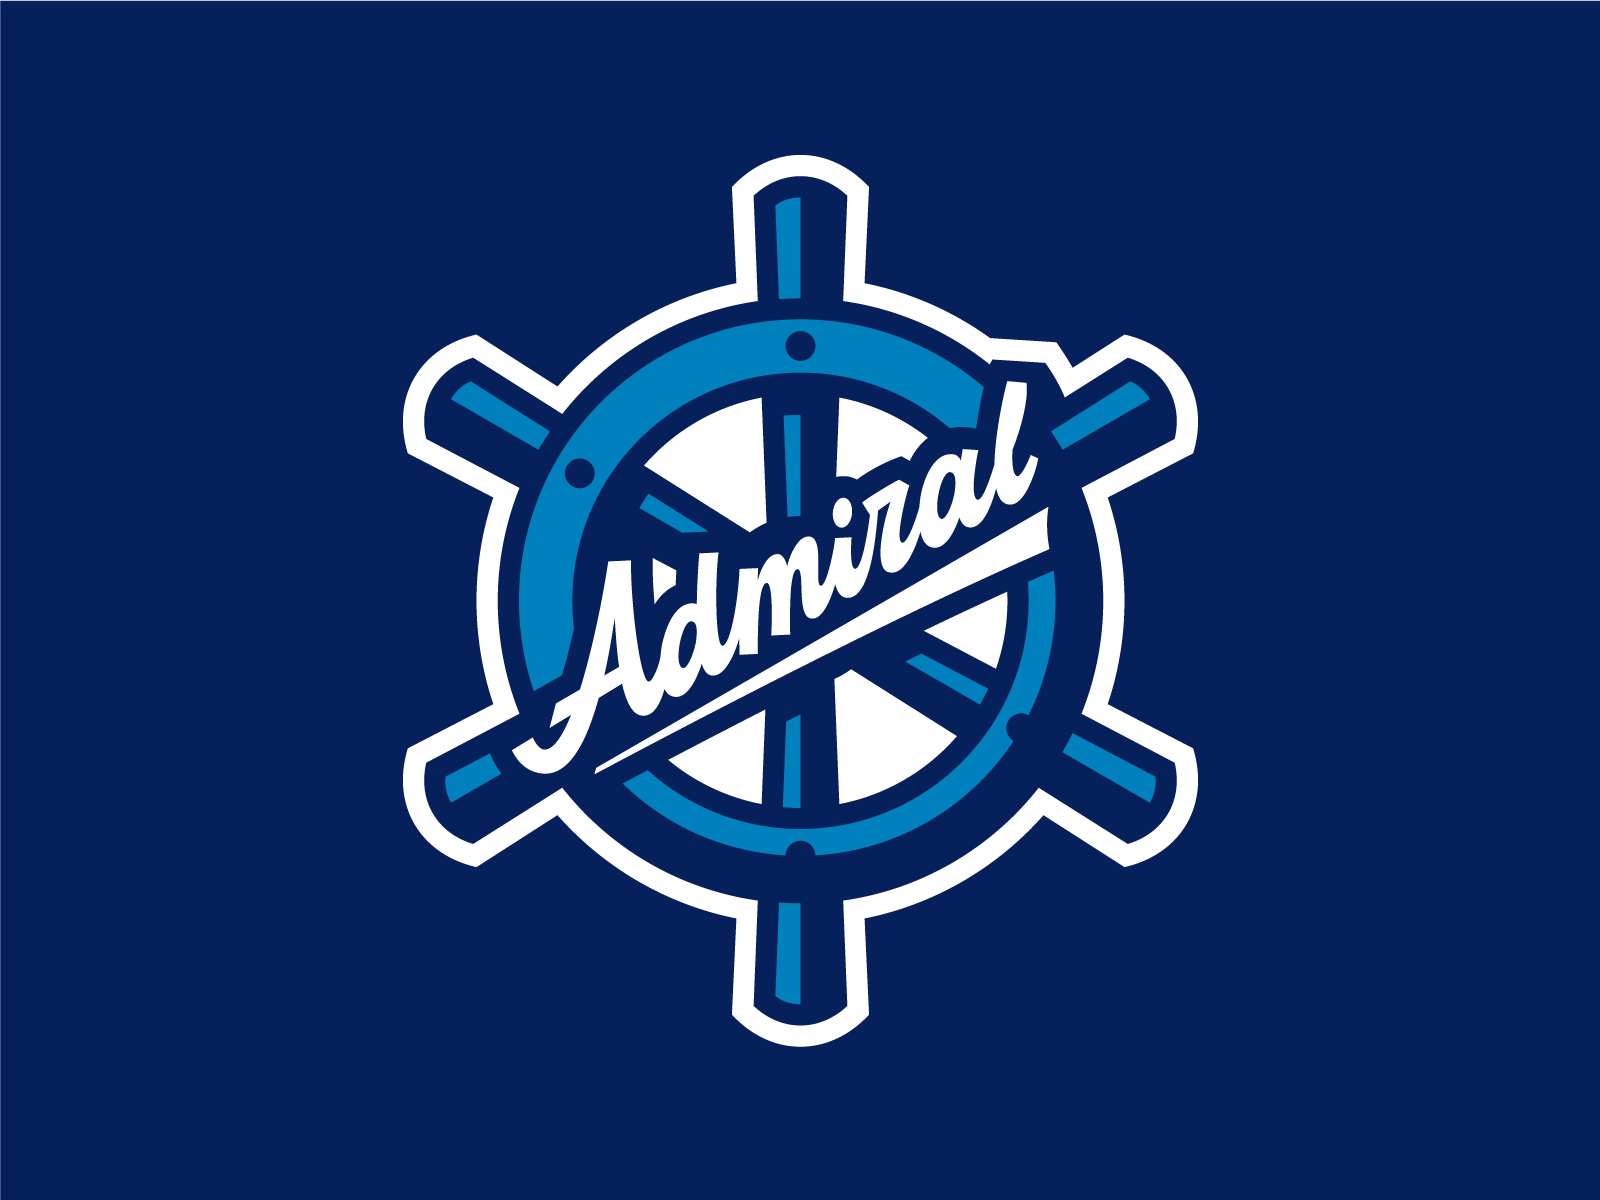 Адмирал владивосток. Эмблема хоккейного клуба Адмирал. Адмирал Владивосток логотип. Хк Адмирал лого. Хк Адмирал Владивосток логотип.